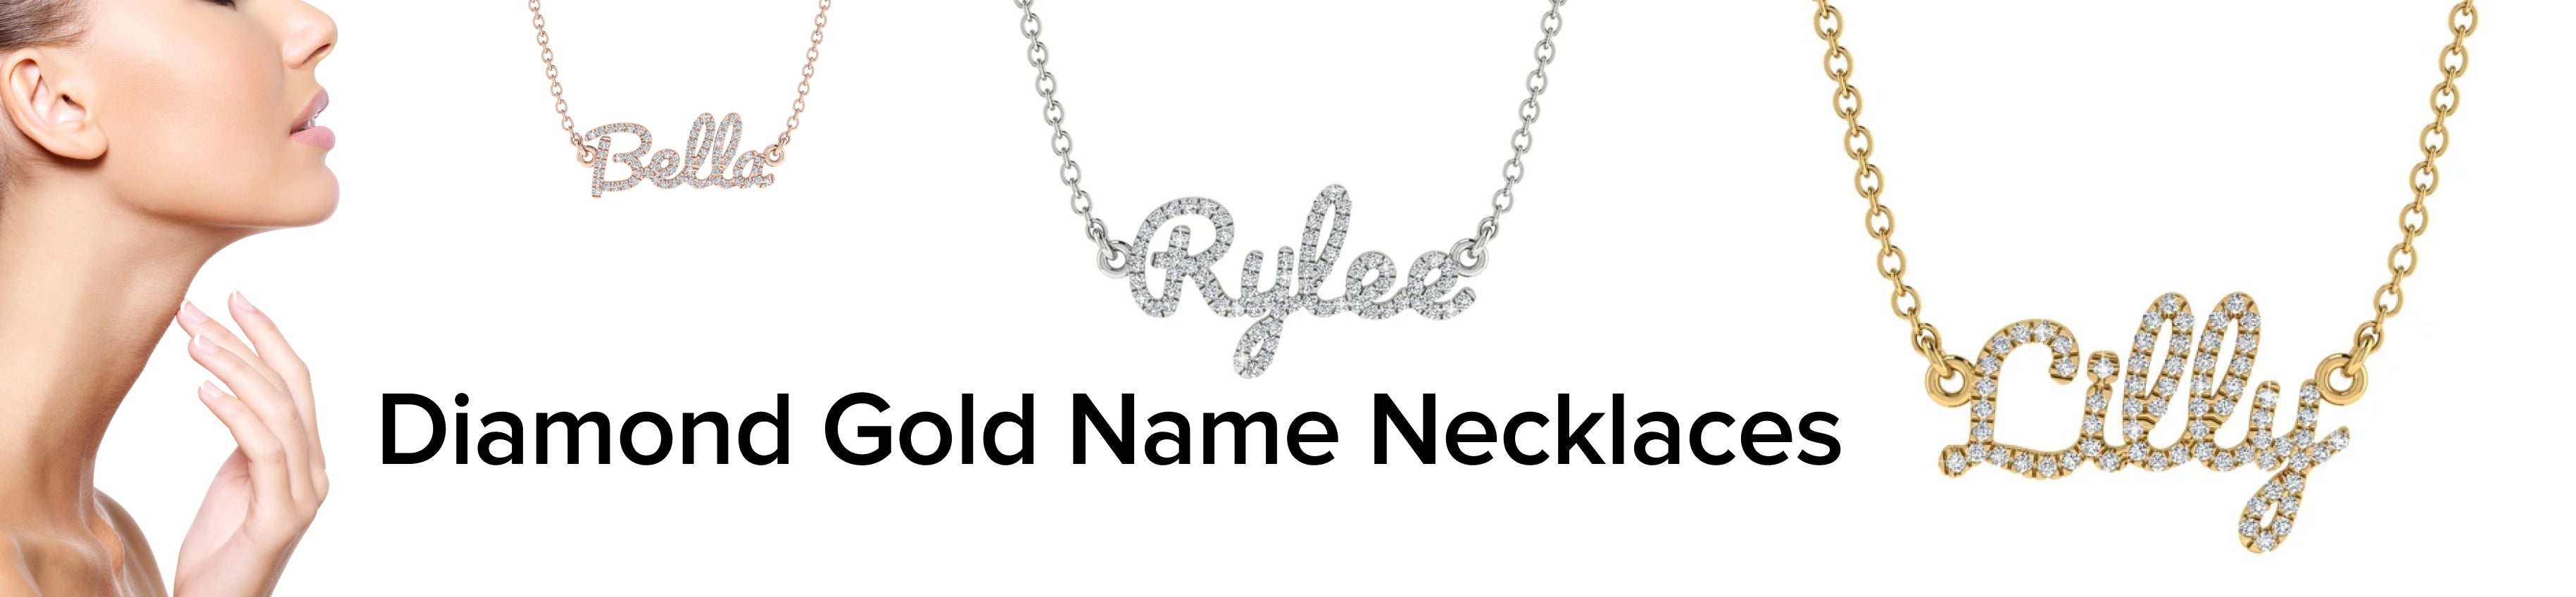 Diamond Gold Name Necklaces Banner